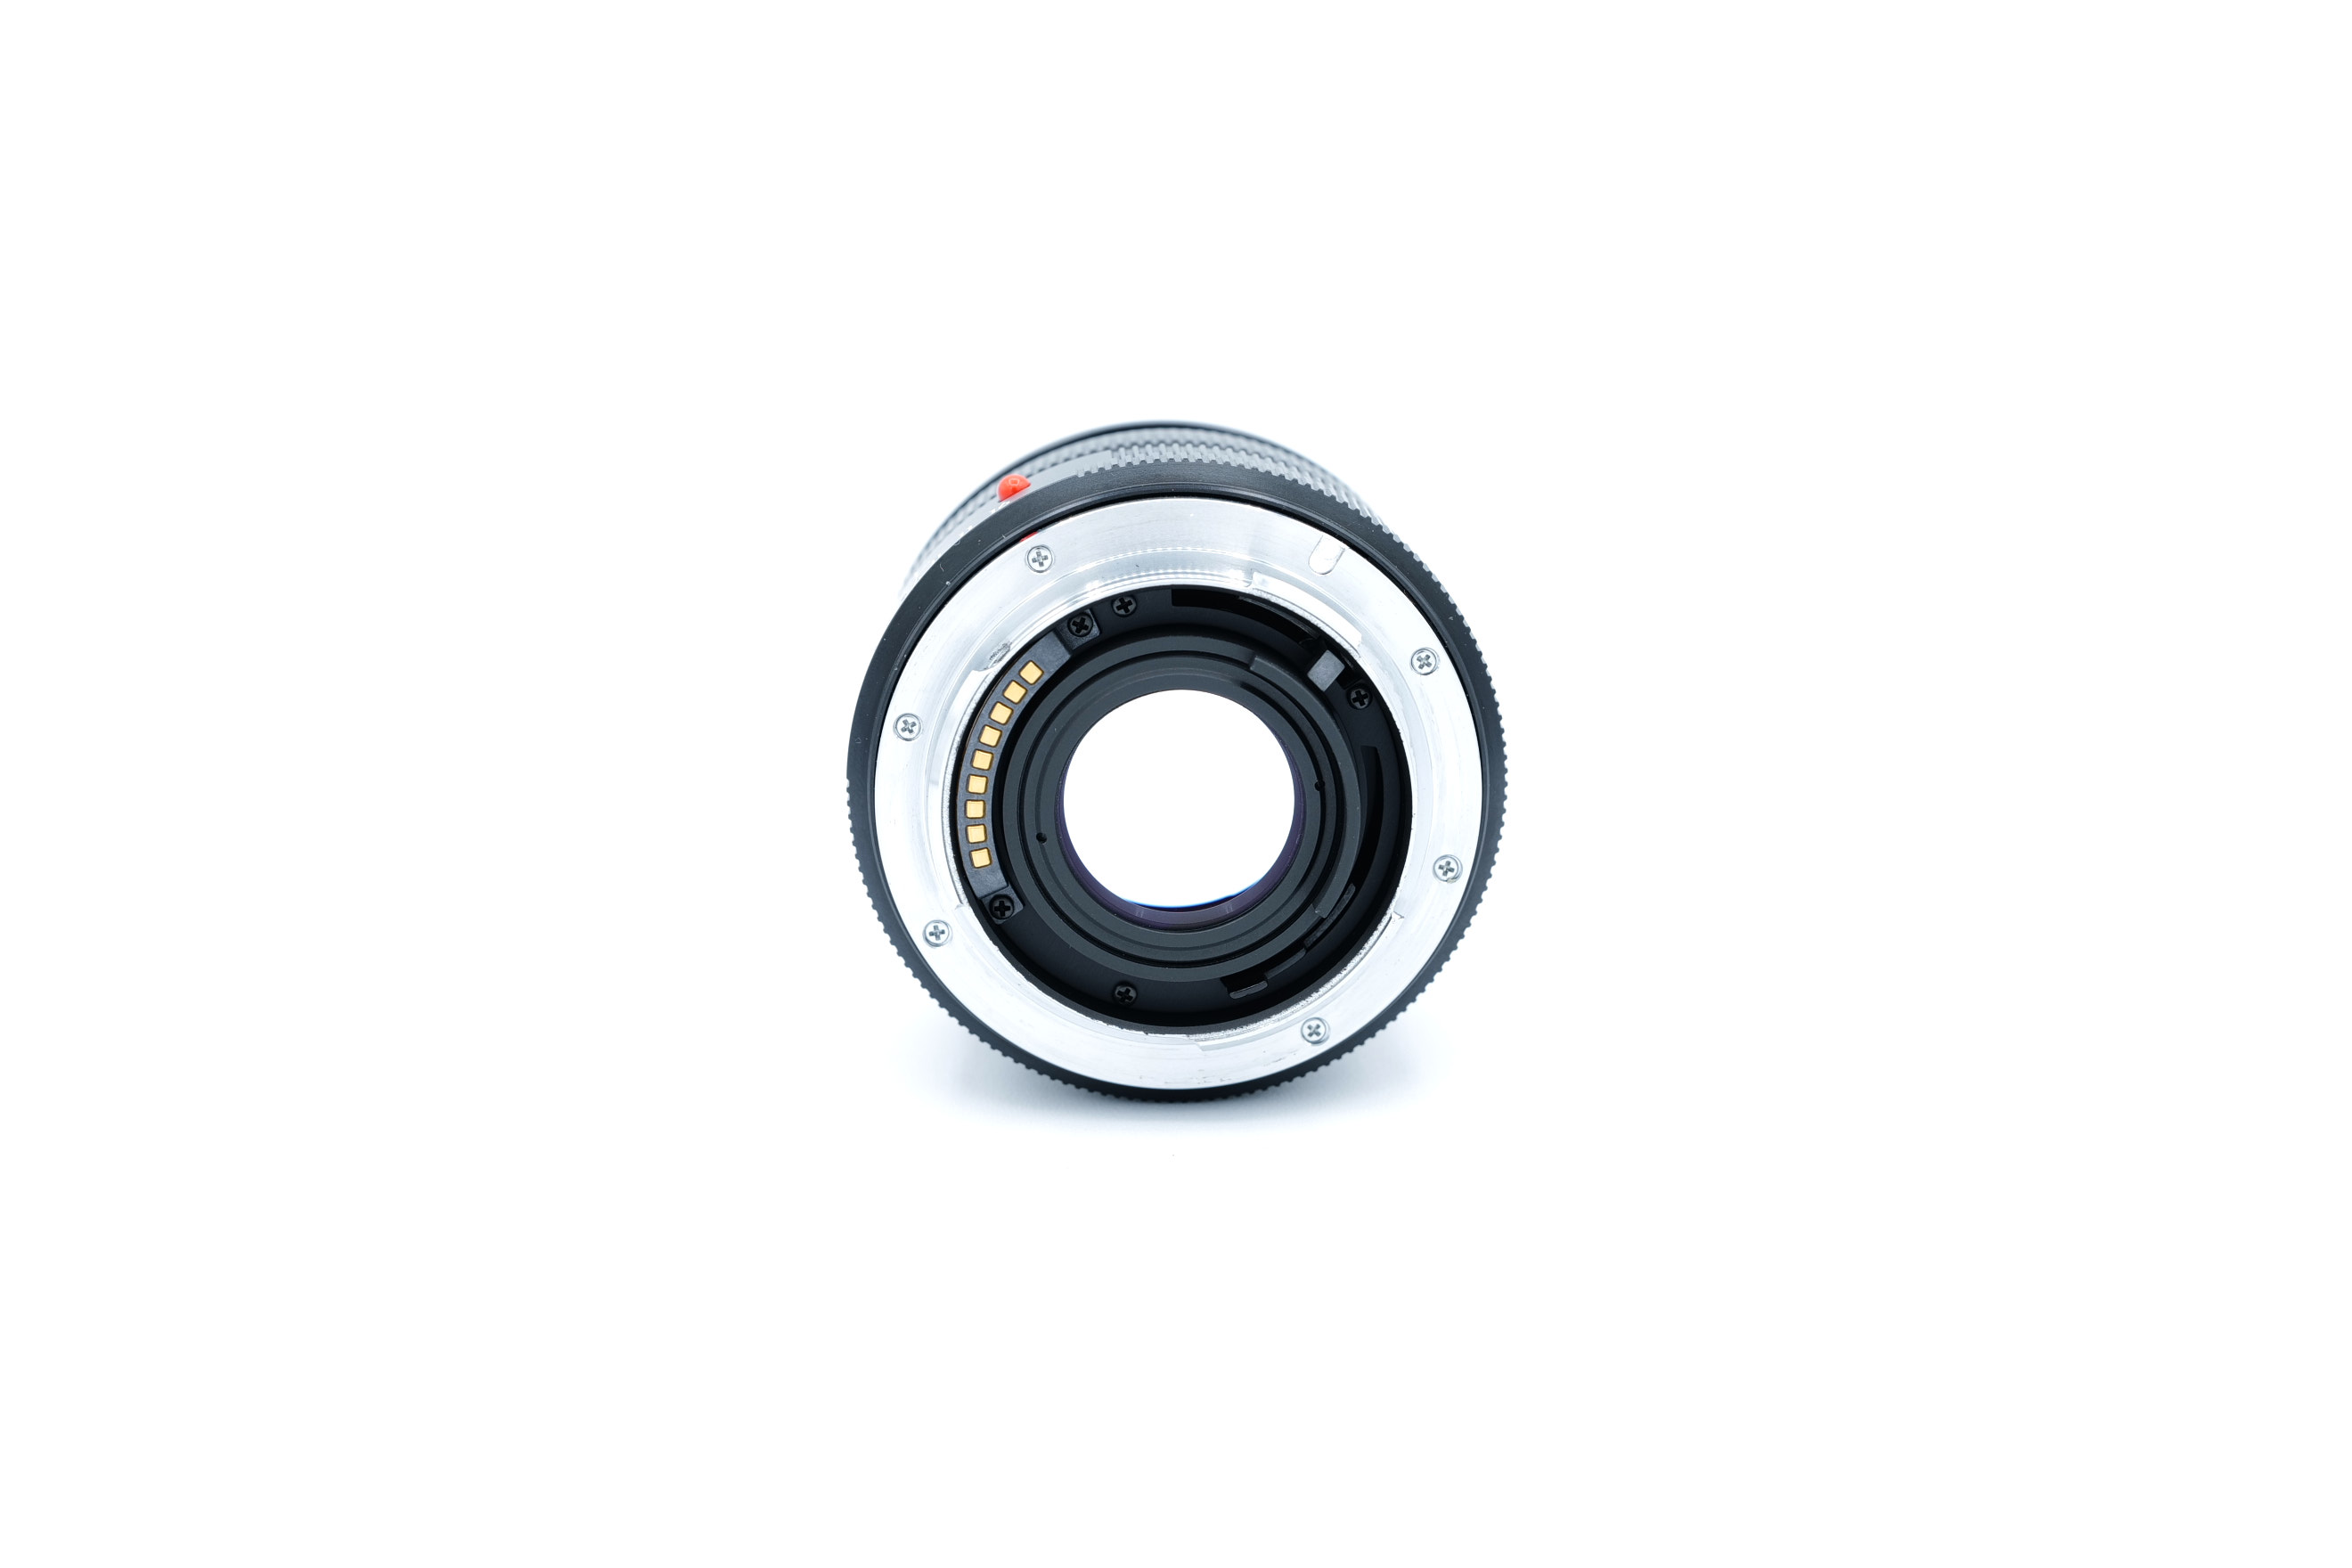 Leica Summicron-R f/2 50 ROM